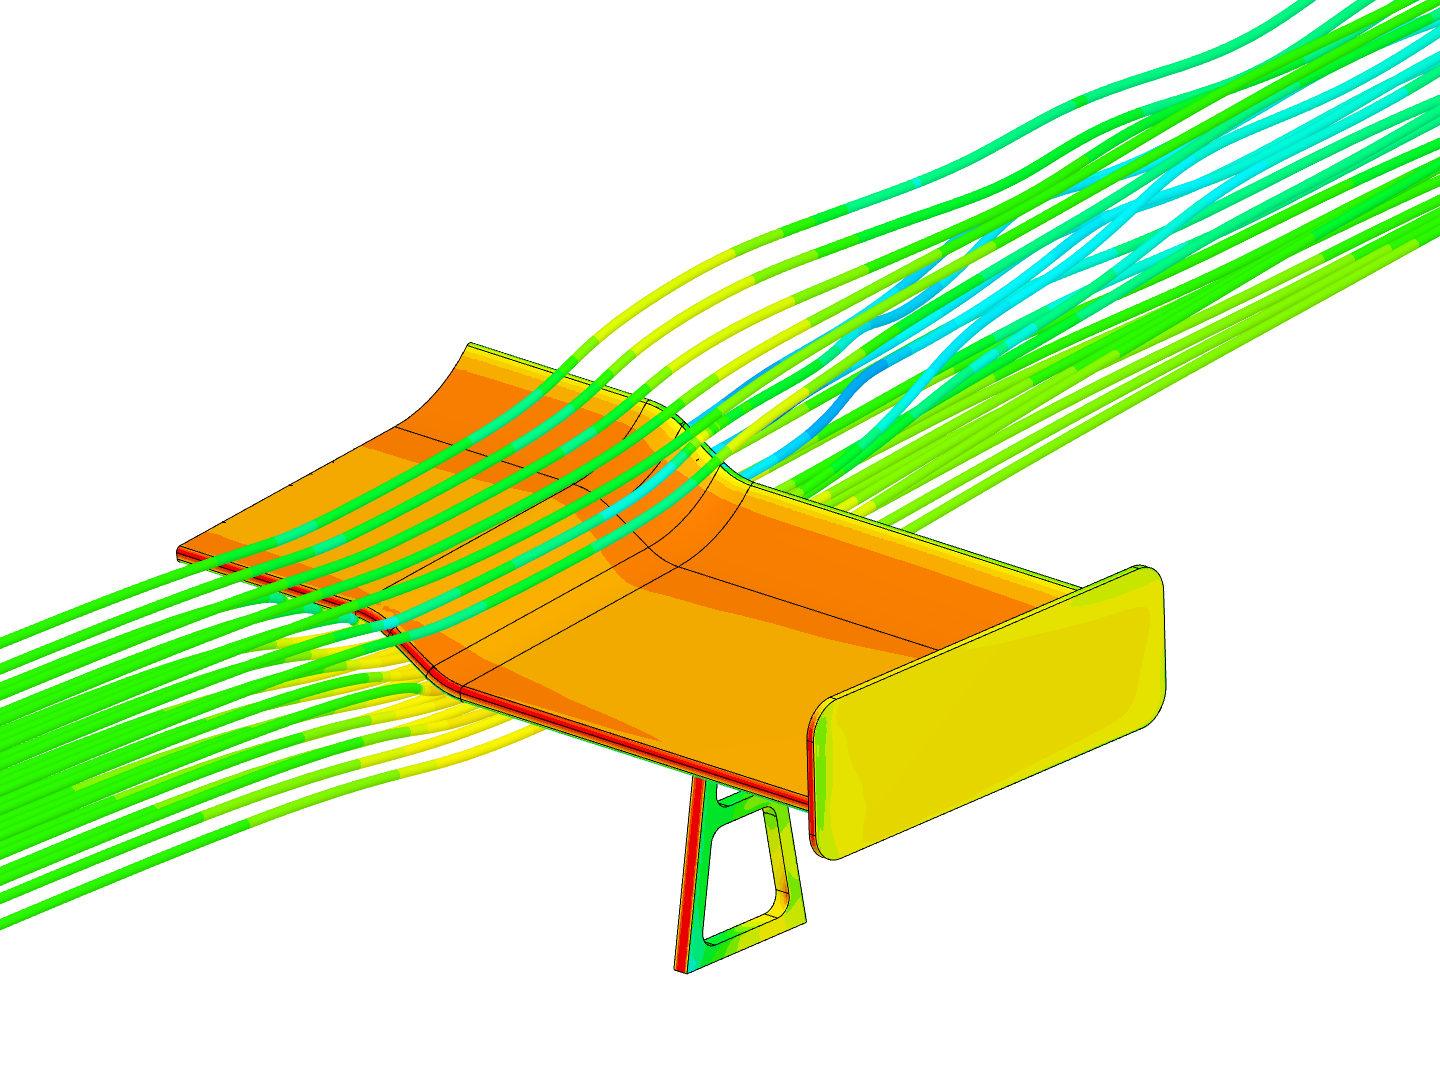 aerobar simulation image